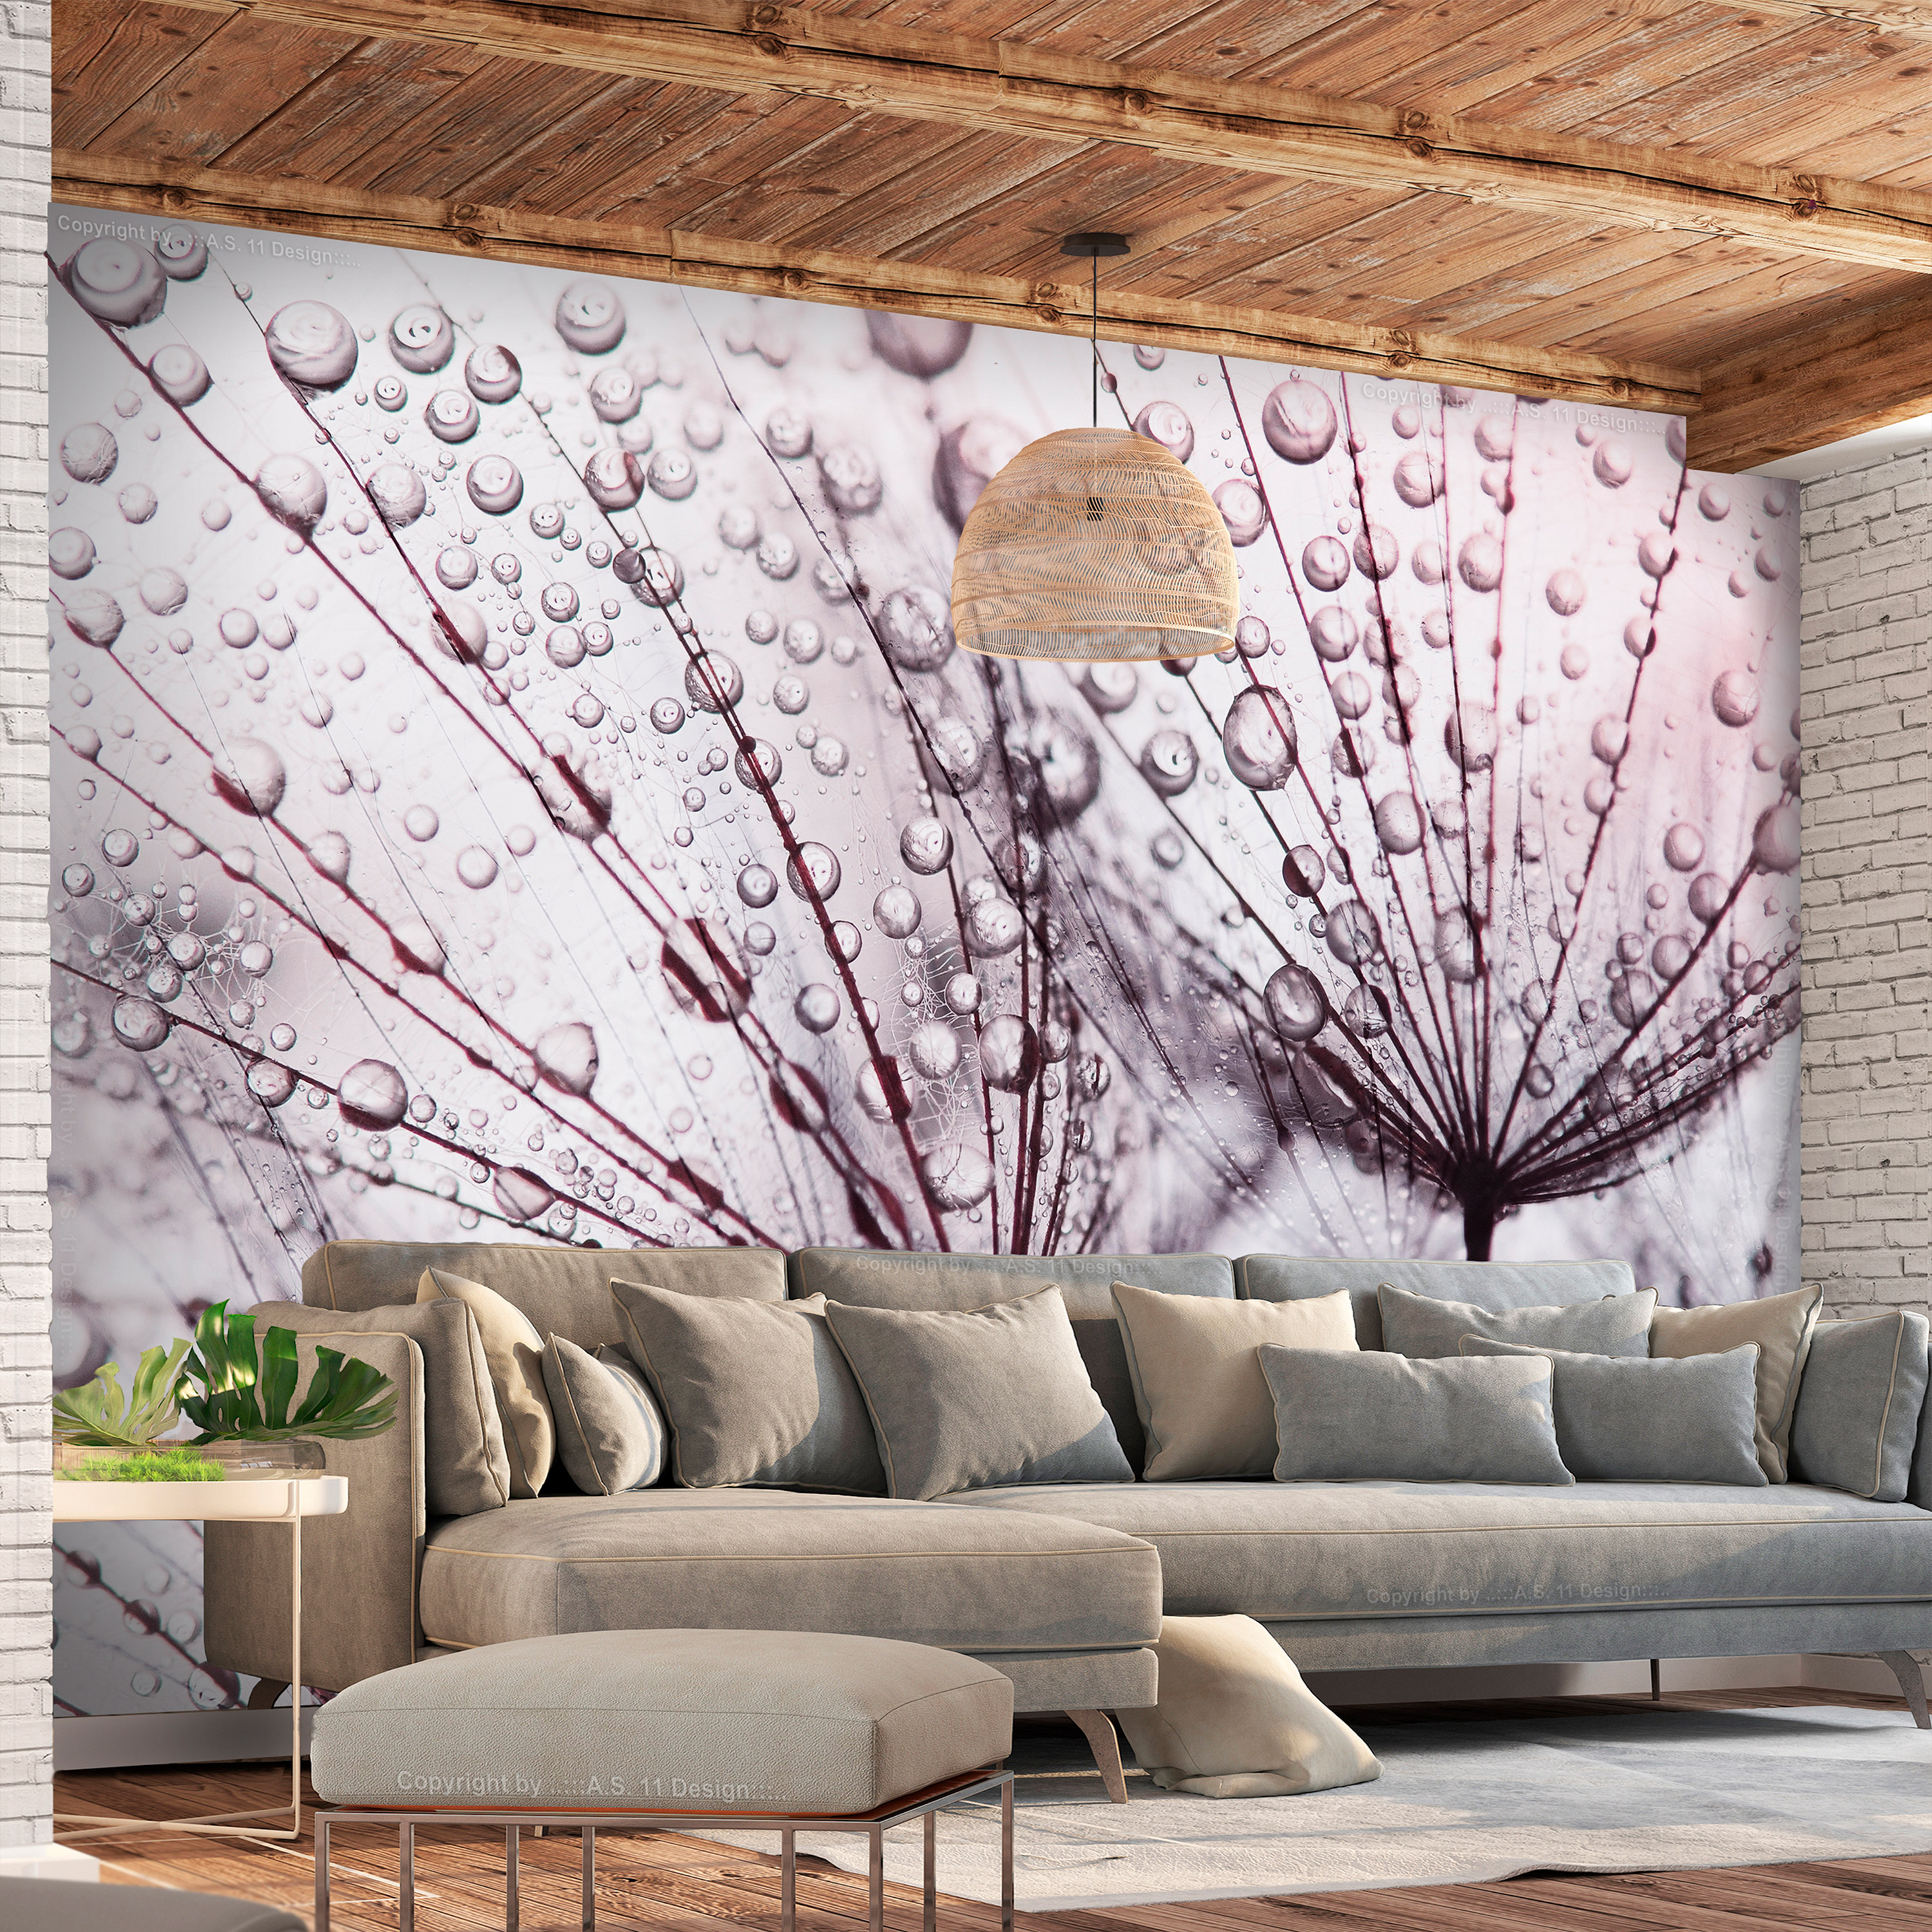 Self-adhesive Wallpaper - Rainy Time - 98x70